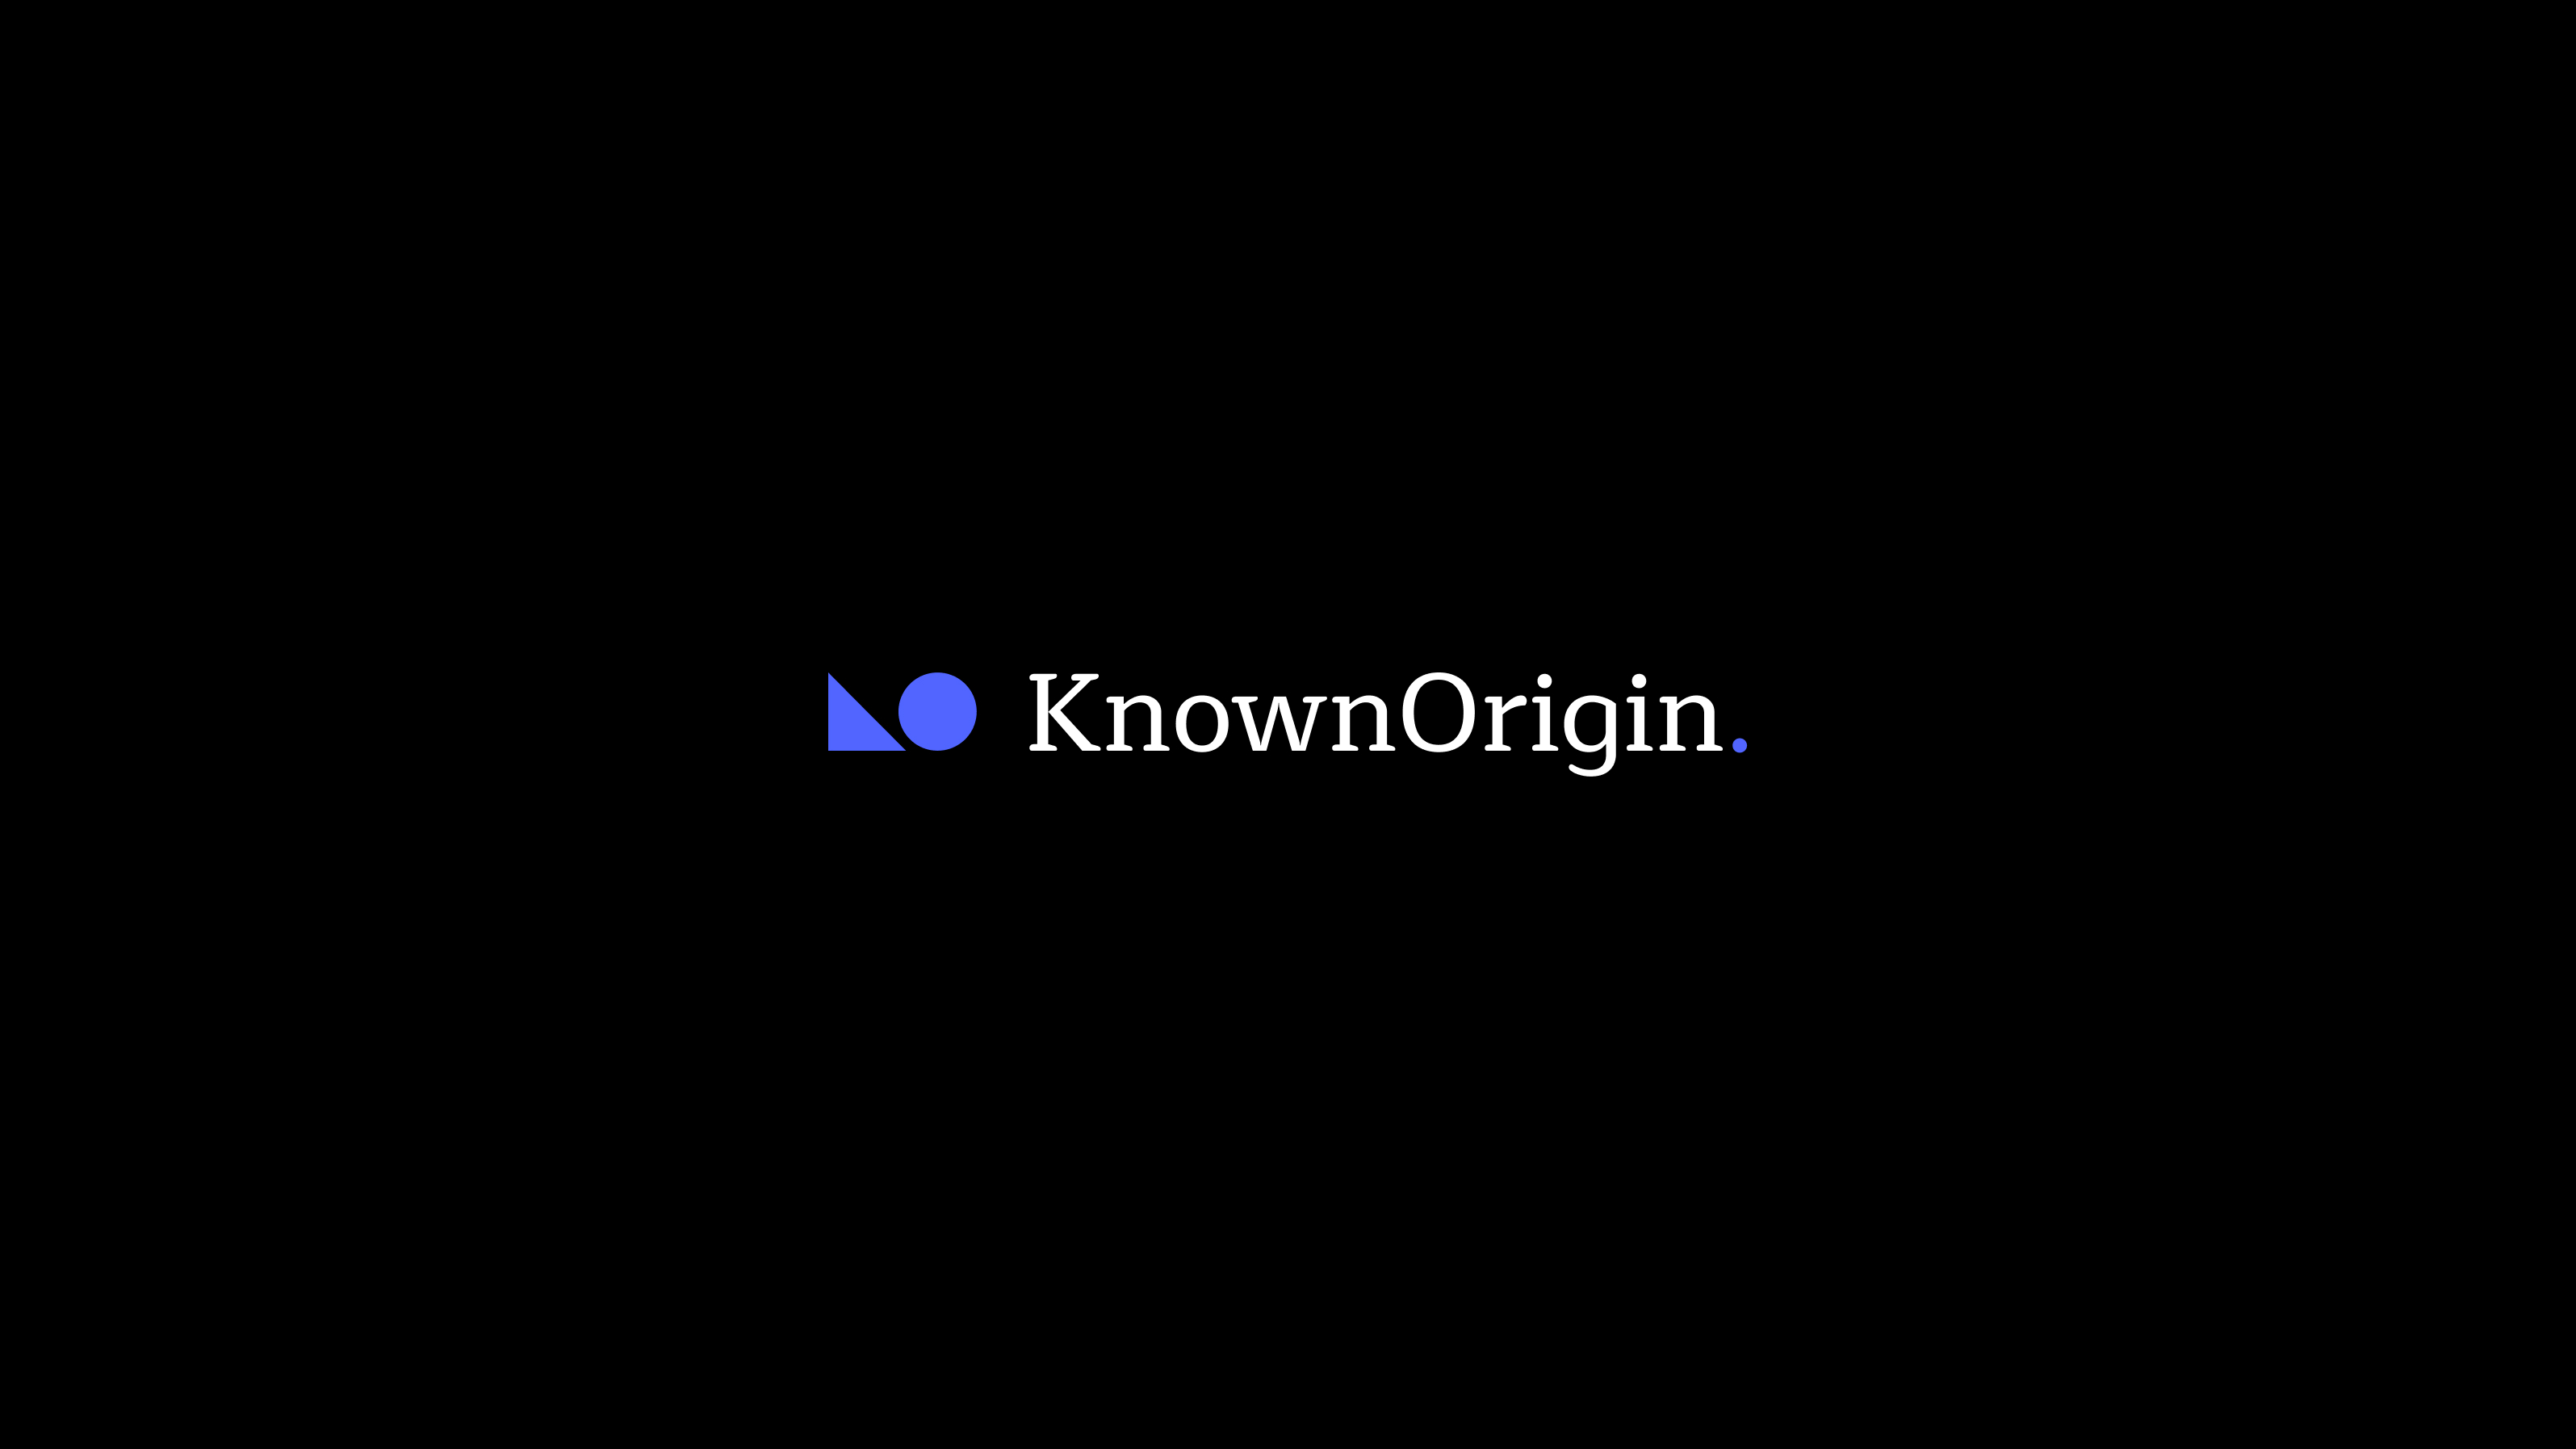 acquires established NFT marketplace KnownOrigin - The Verge